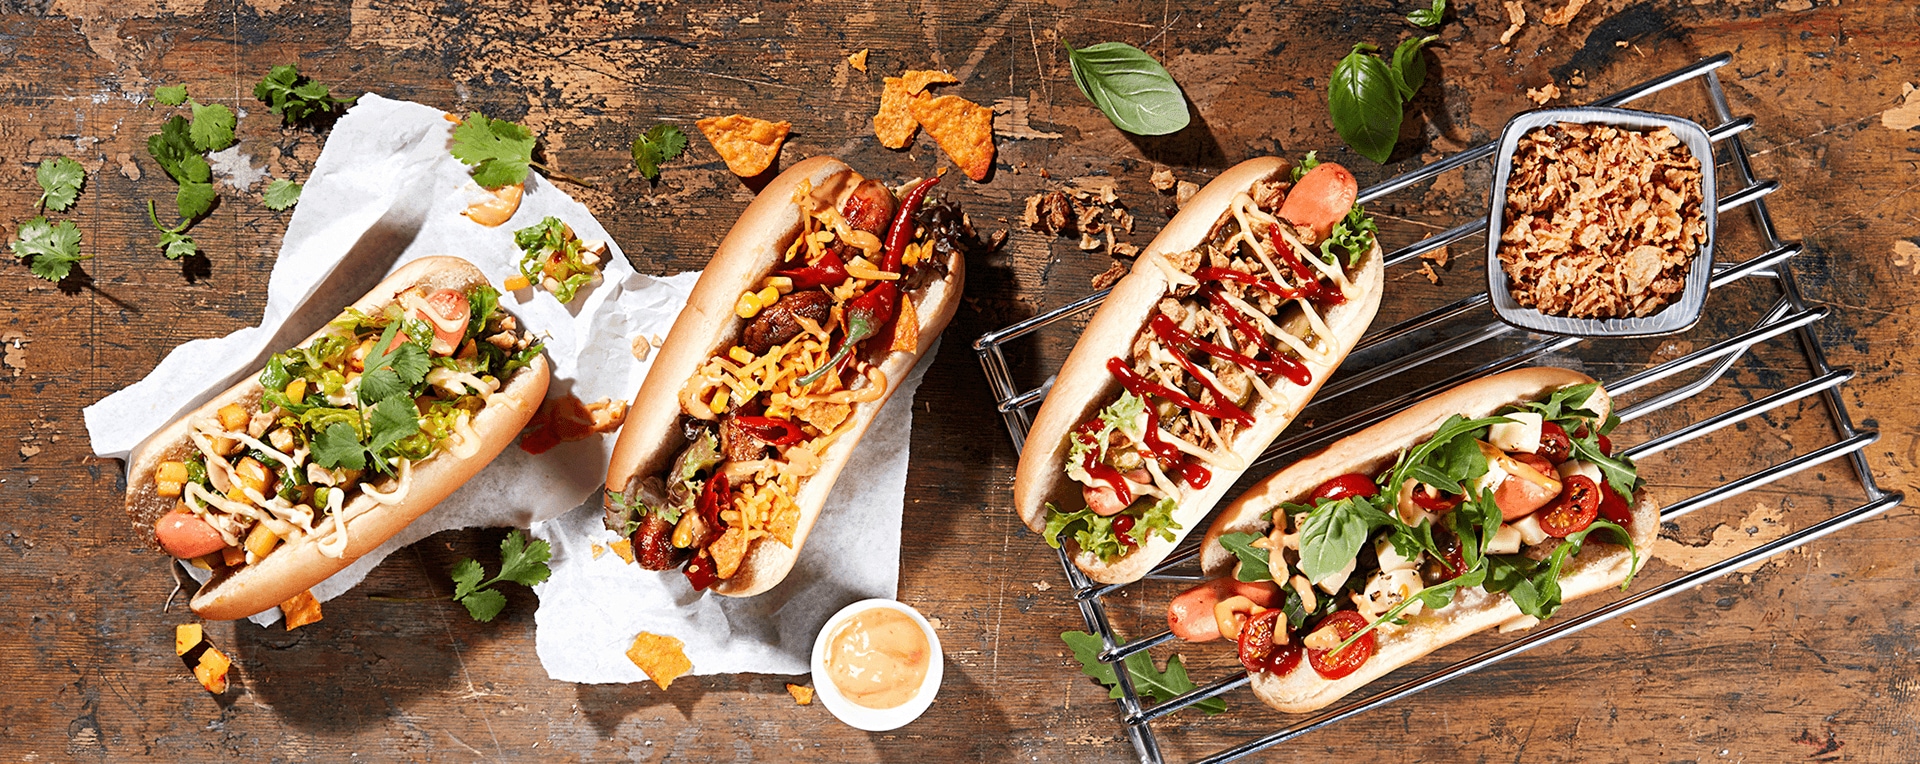 Klassischer Hot Dog & Tex Mex Hot Dog